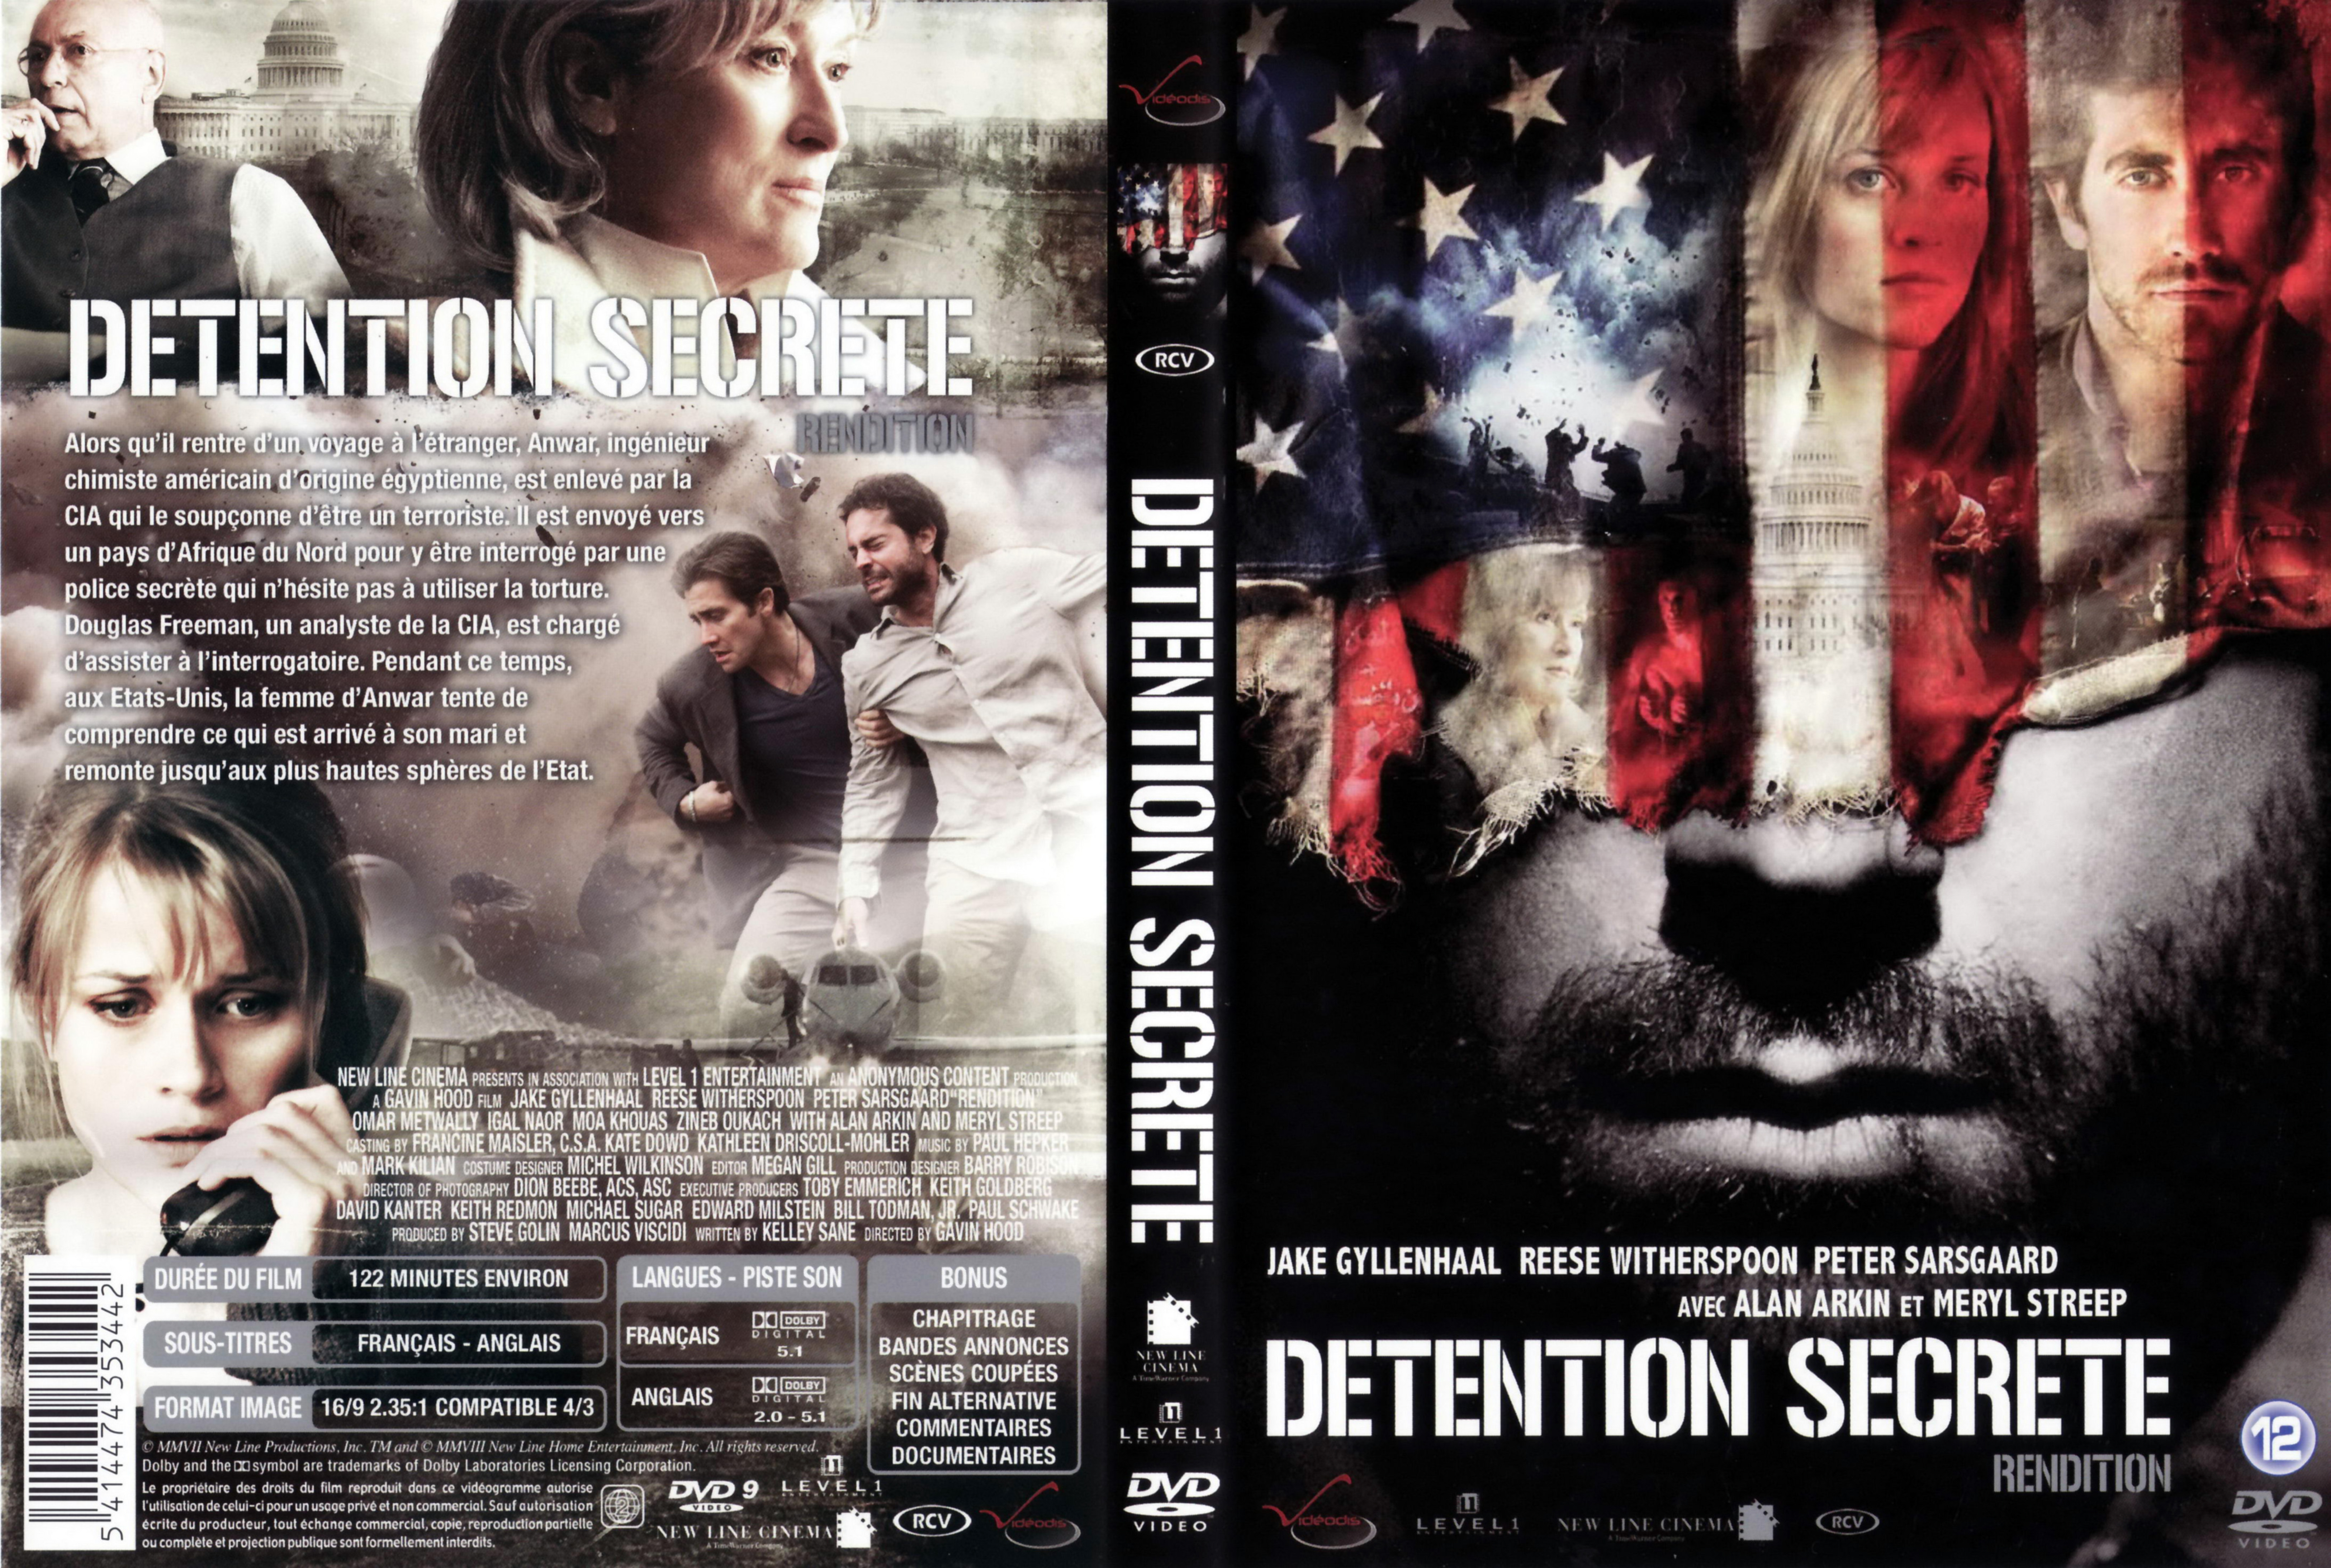 Jaquette DVD Detention secrete v2